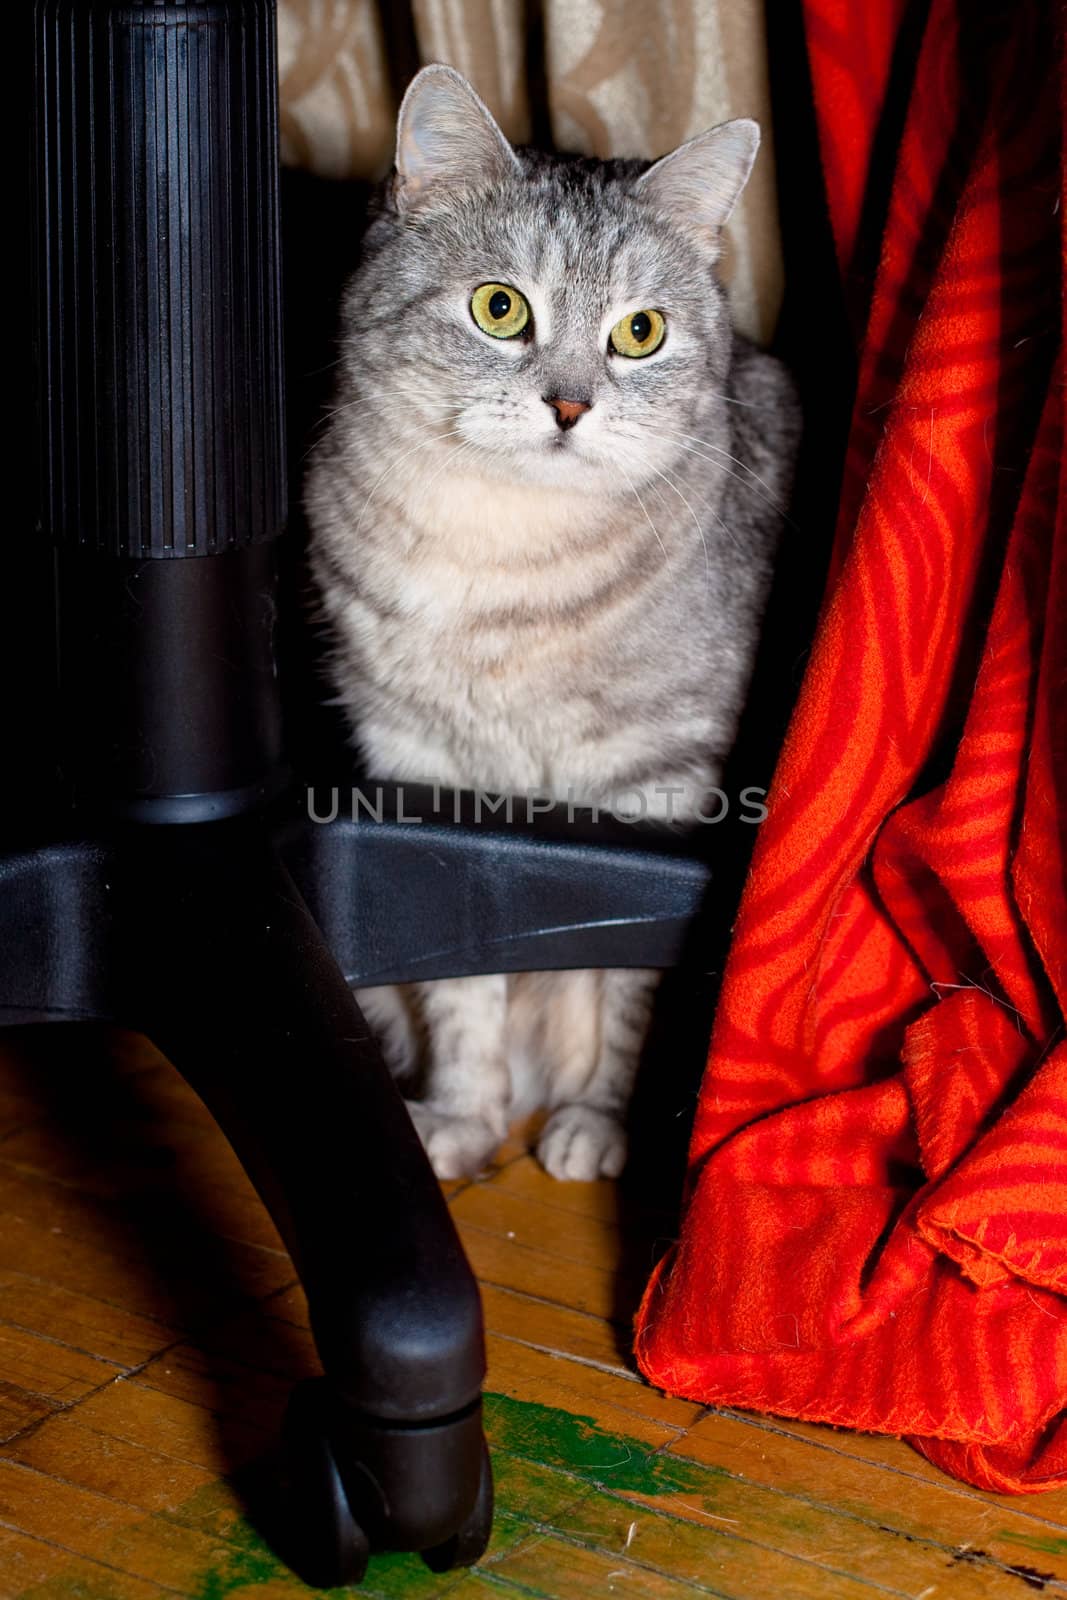 A grey tabby cat sitting under a chair
